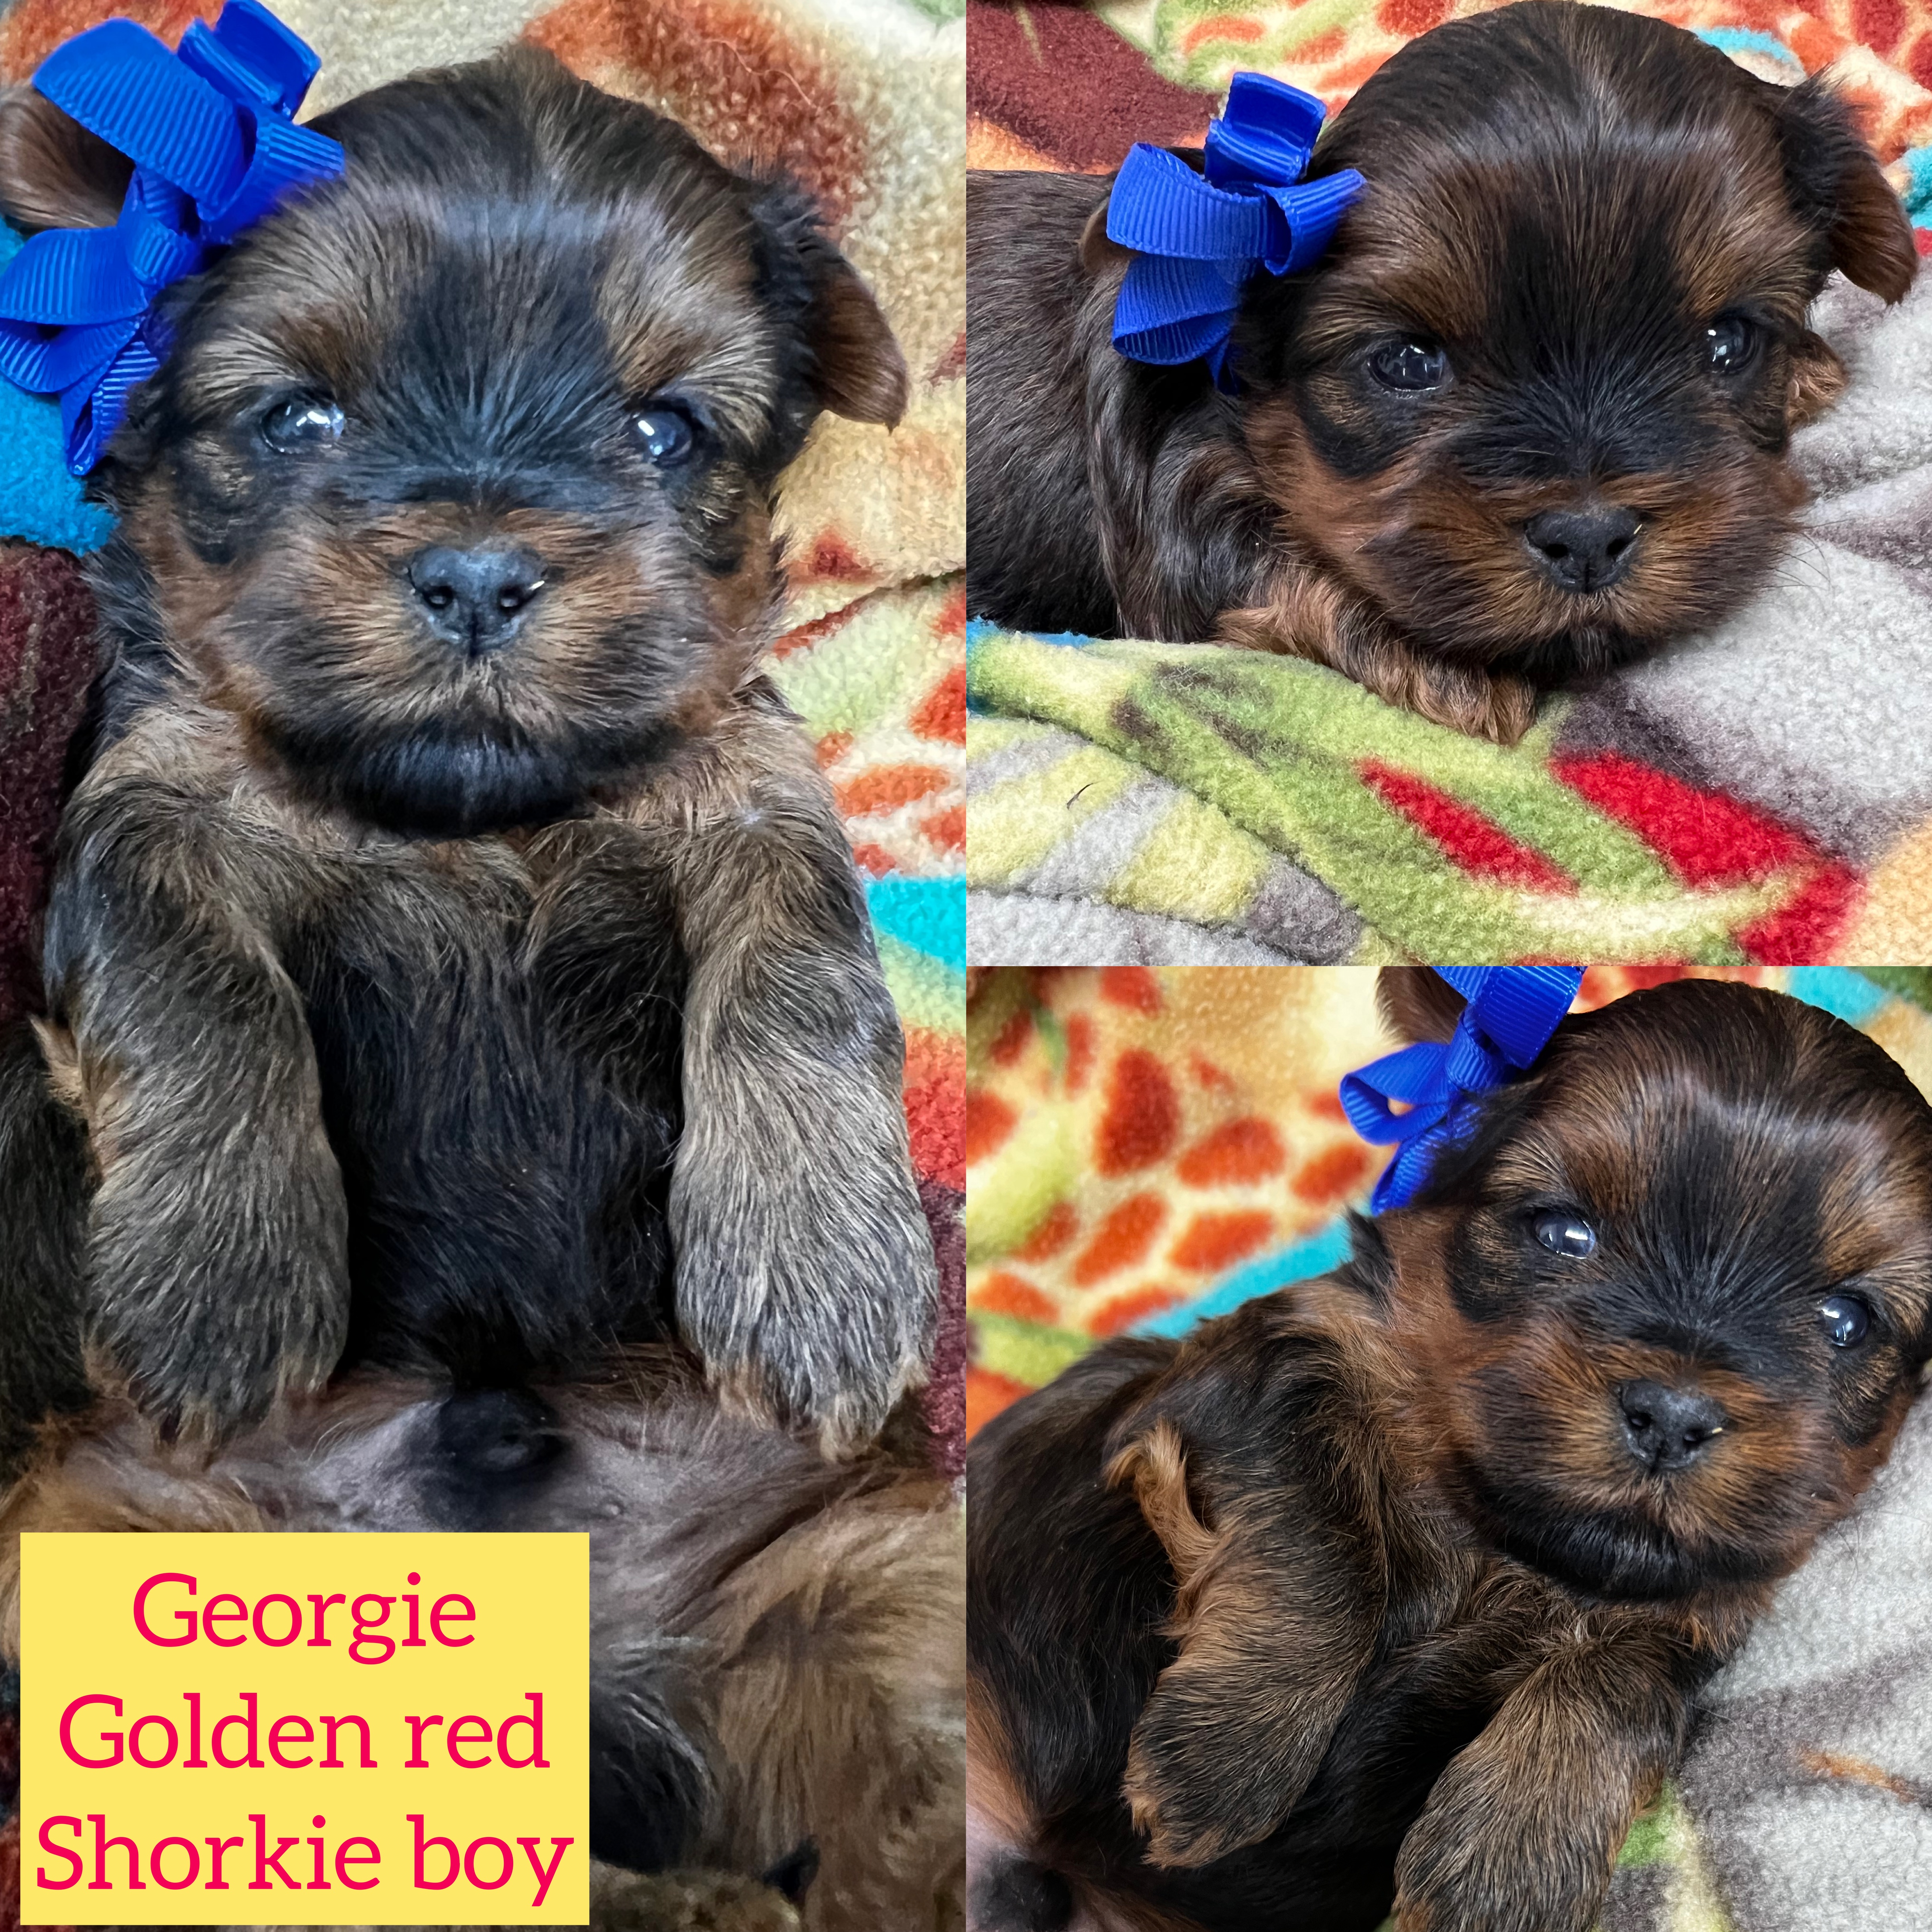 Georgie is adopted!